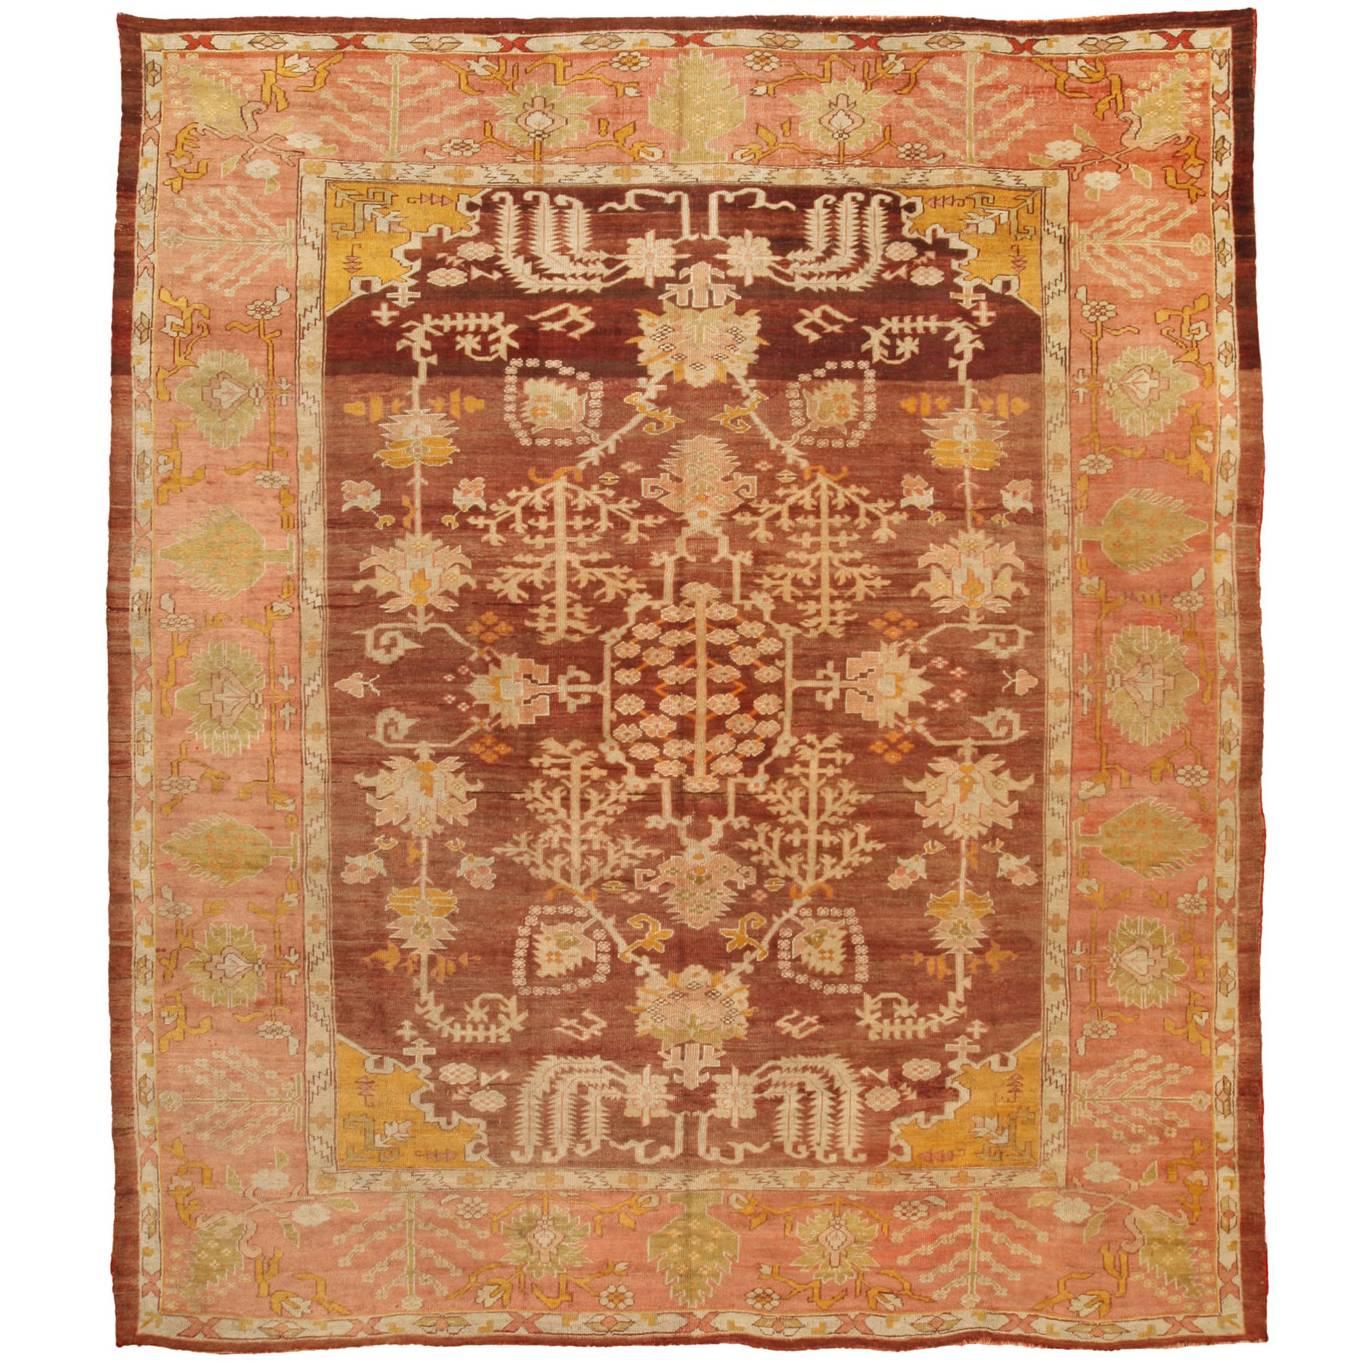 Exceptional Antique Mid-19th Century Turkish Oushak Carpet For Sale